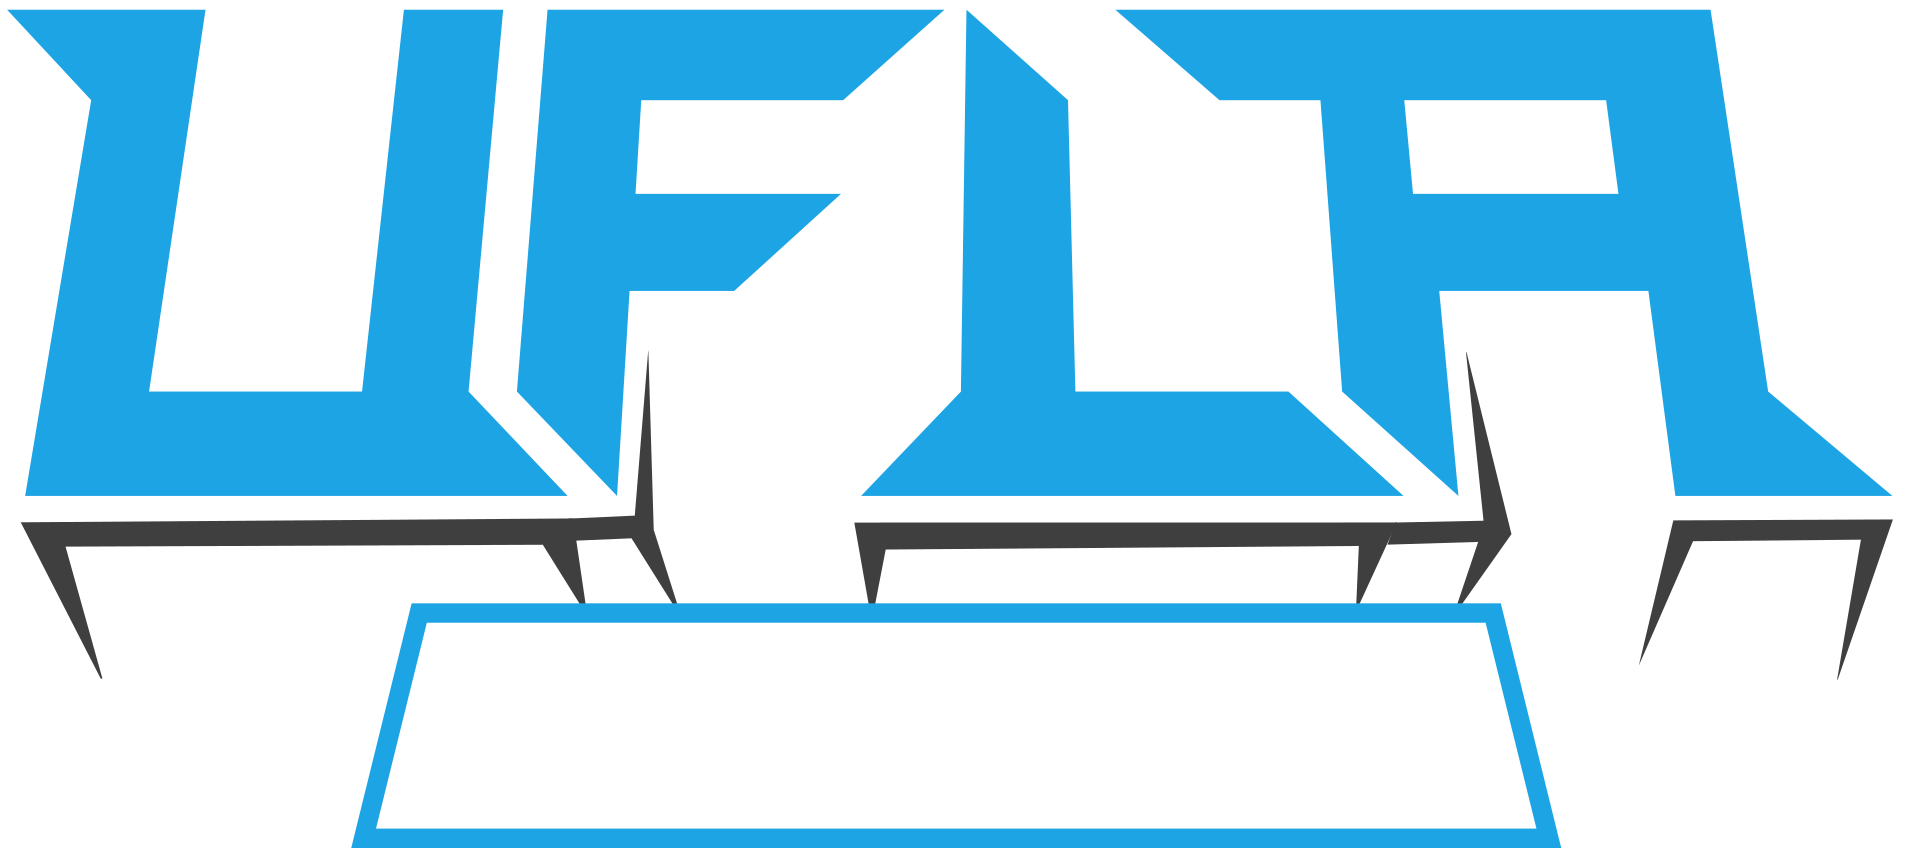 UFLA e-Sports logo